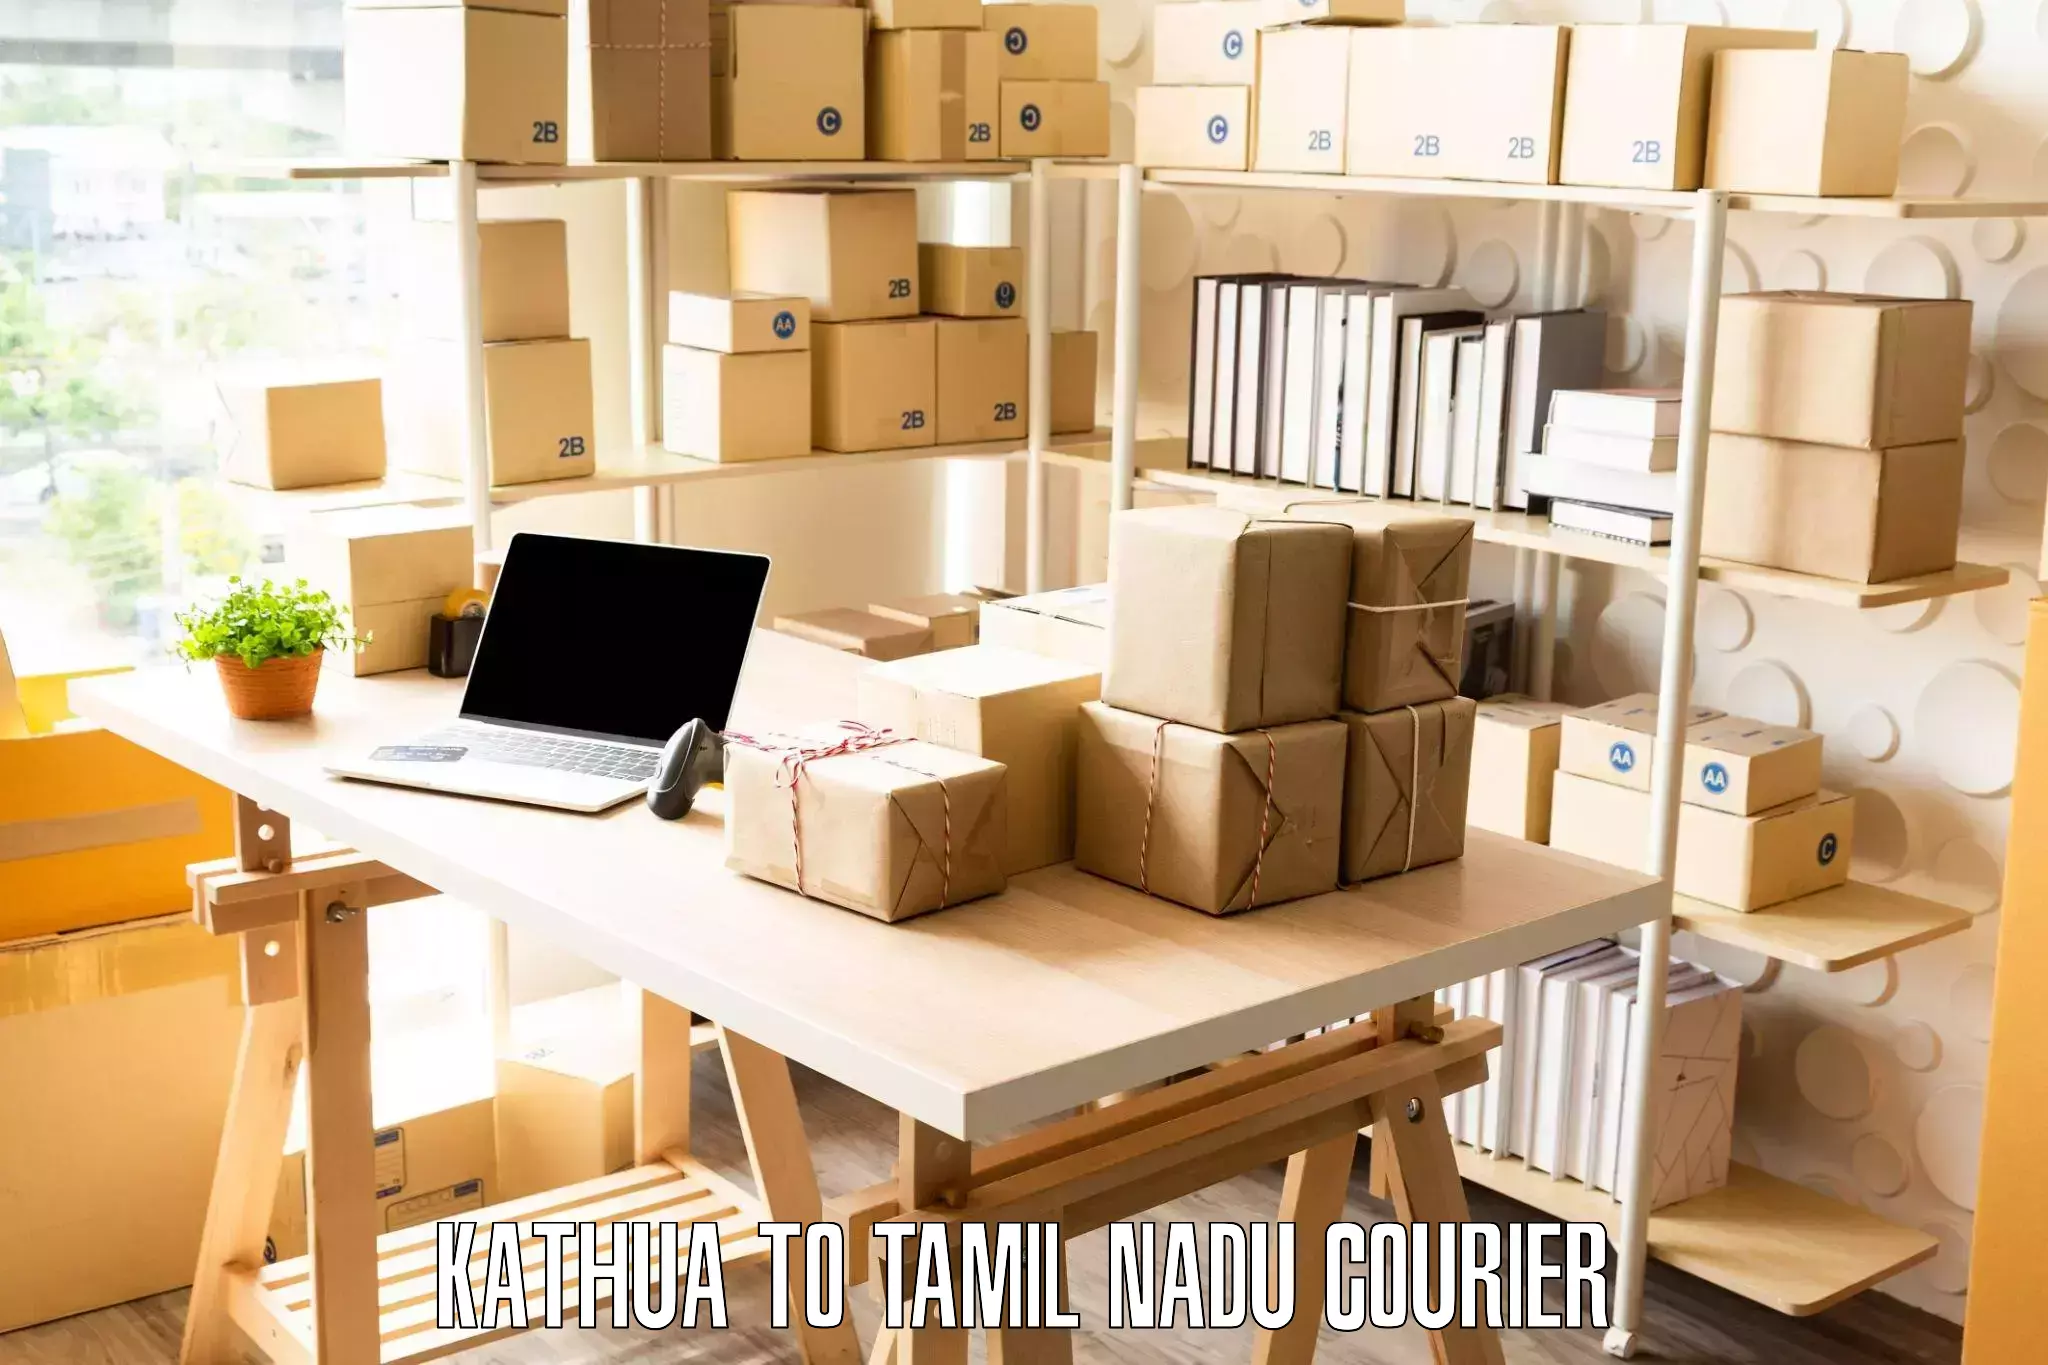 Furniture transport company Kathua to Tamil Nadu